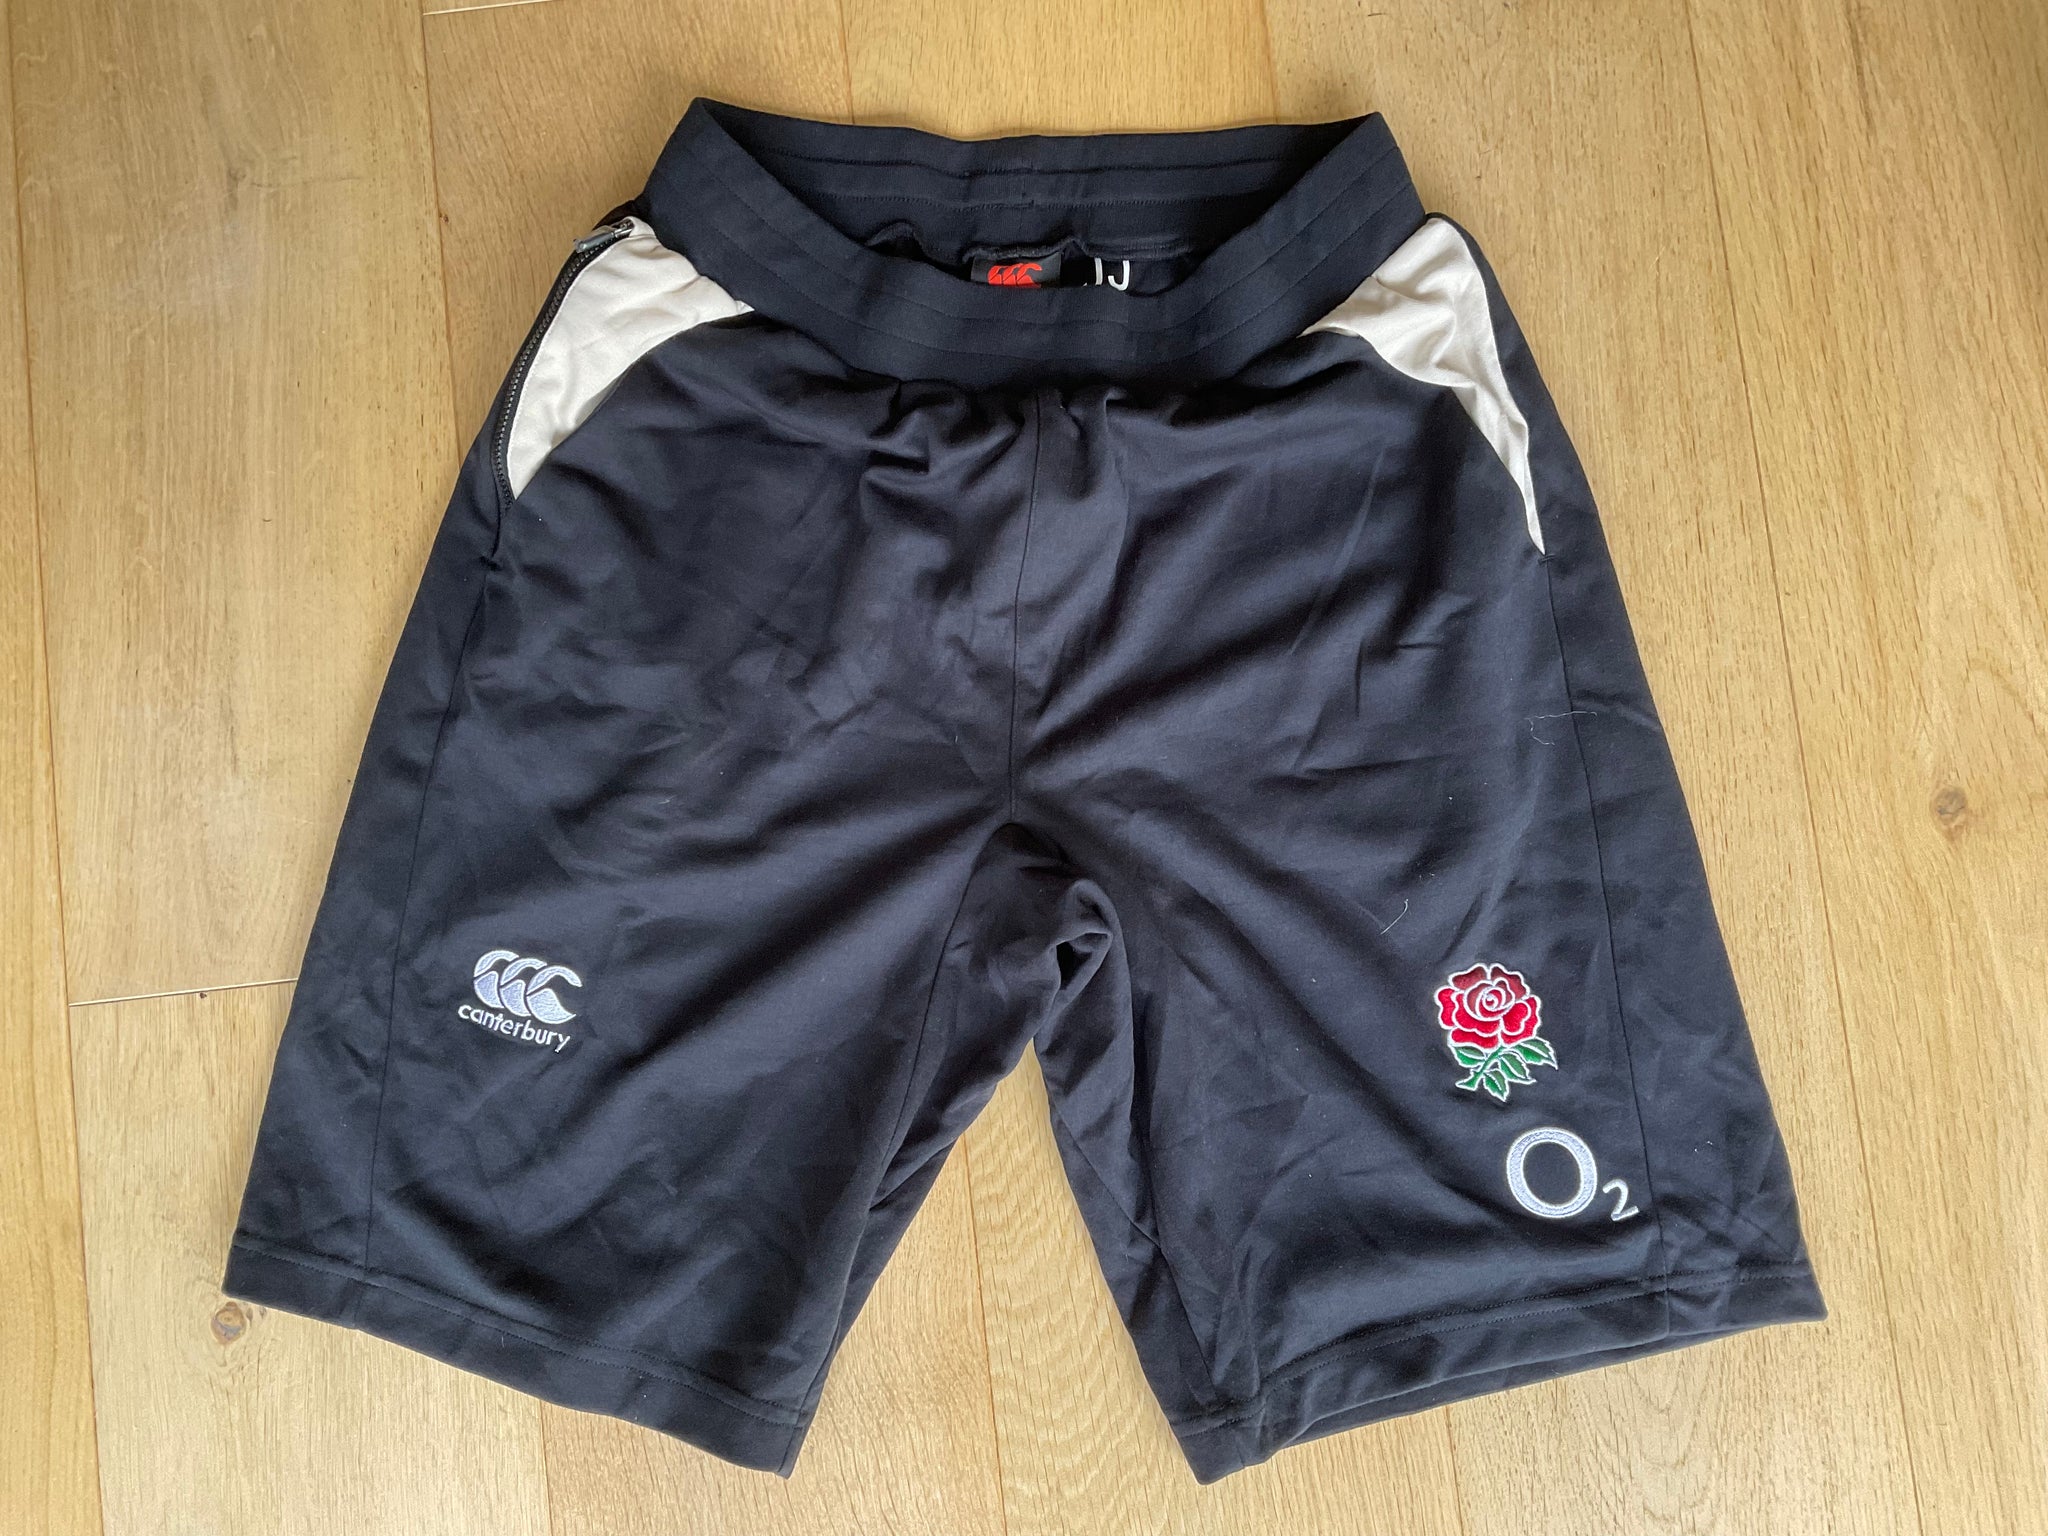 Jonathan Joseph - England Rugby Fleece Shorts [Black & Ivory]